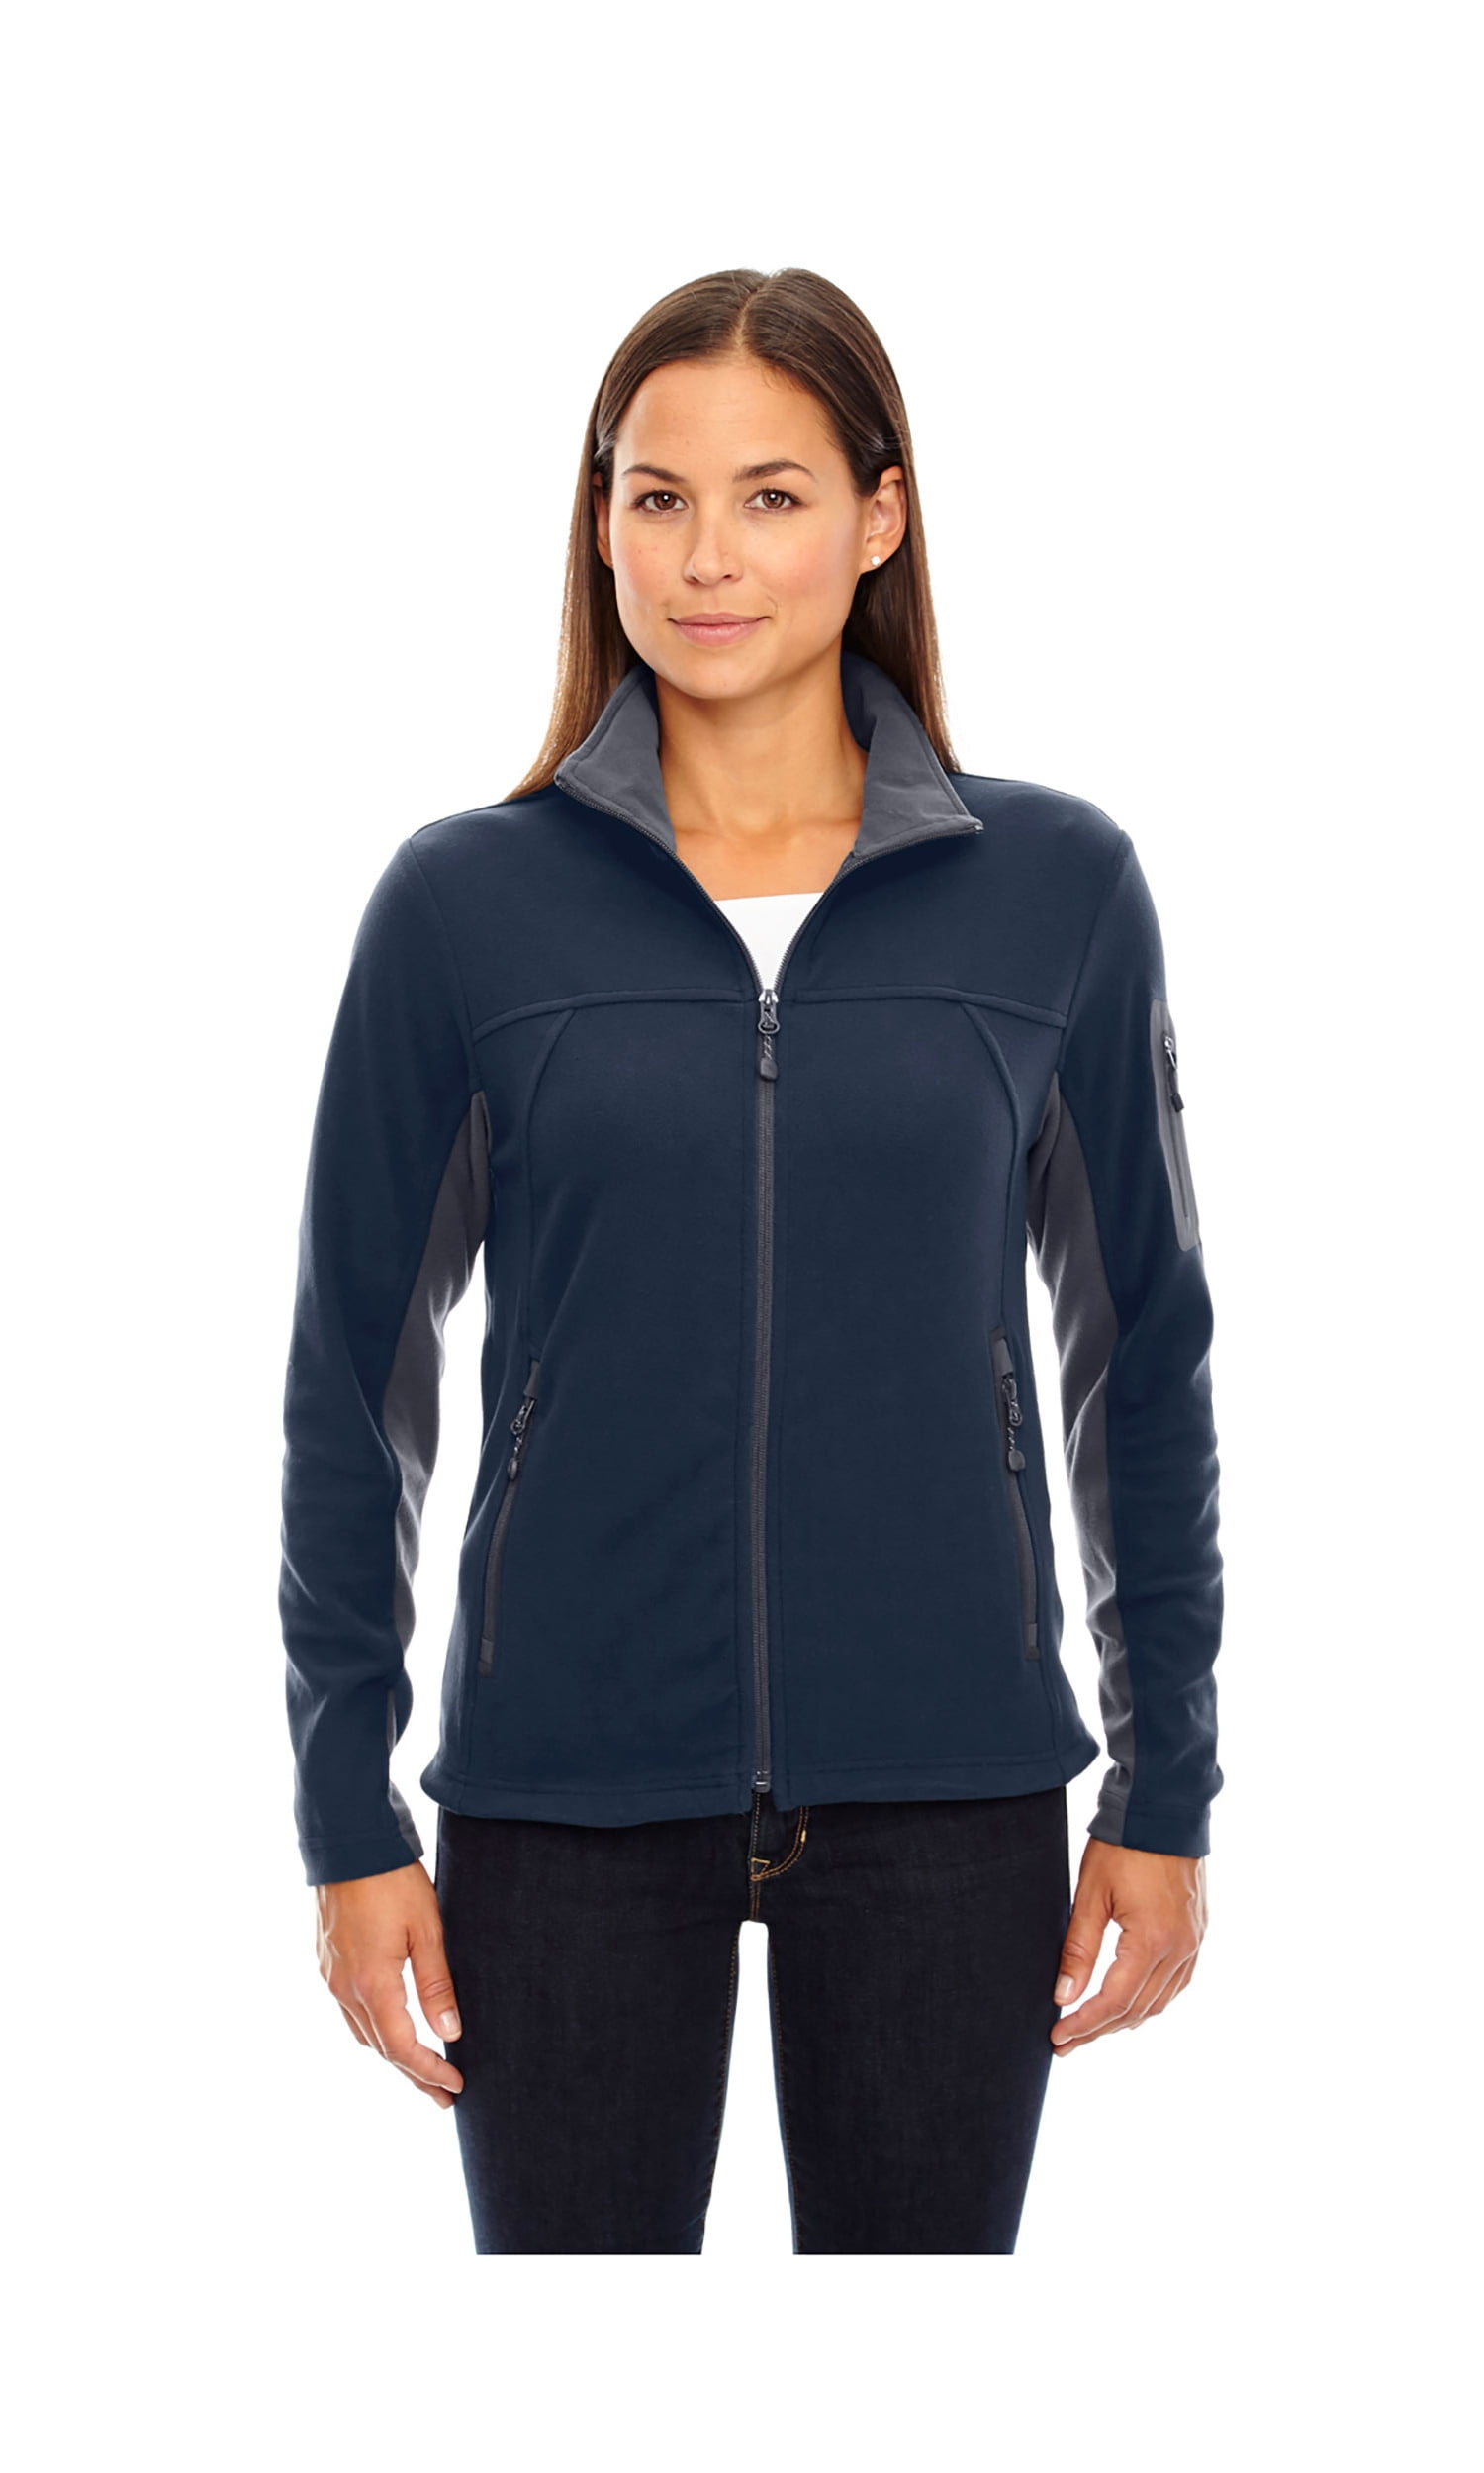 Ash City Women's Full-Zip Microfleece Jacket, Style 78048 - Walmart.com